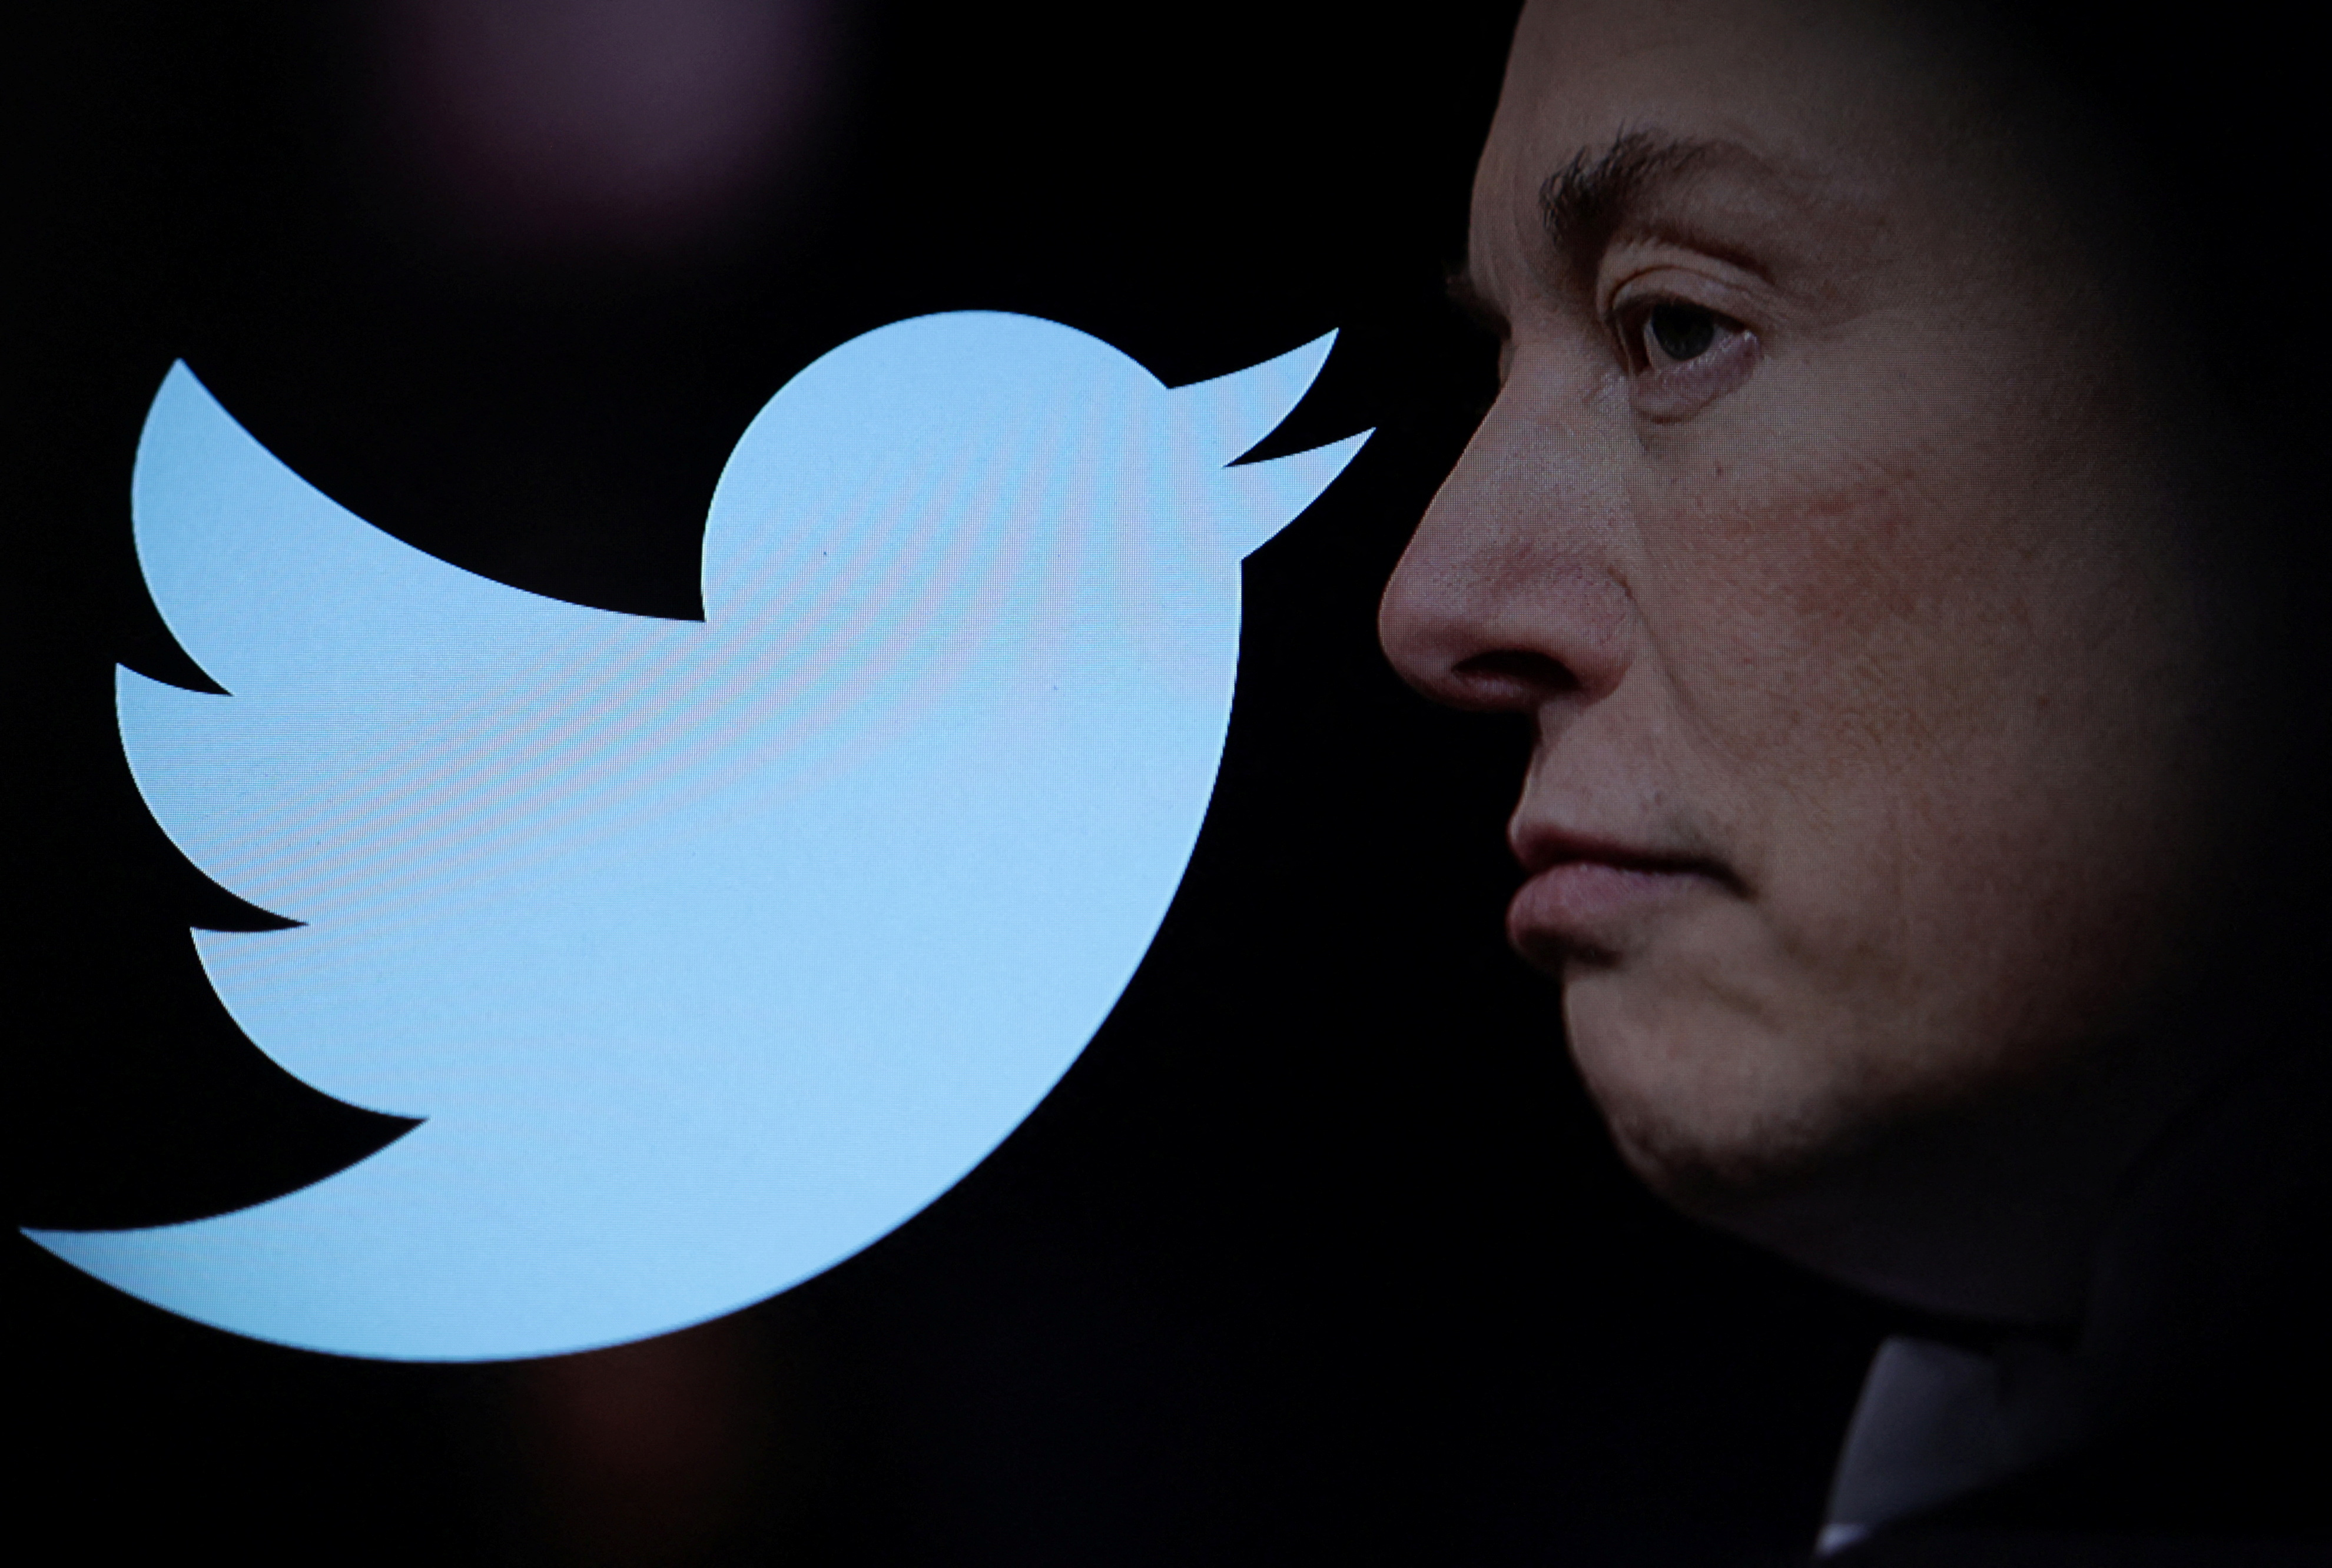 Illustration showing Elon Musk's photo and Twitter logo